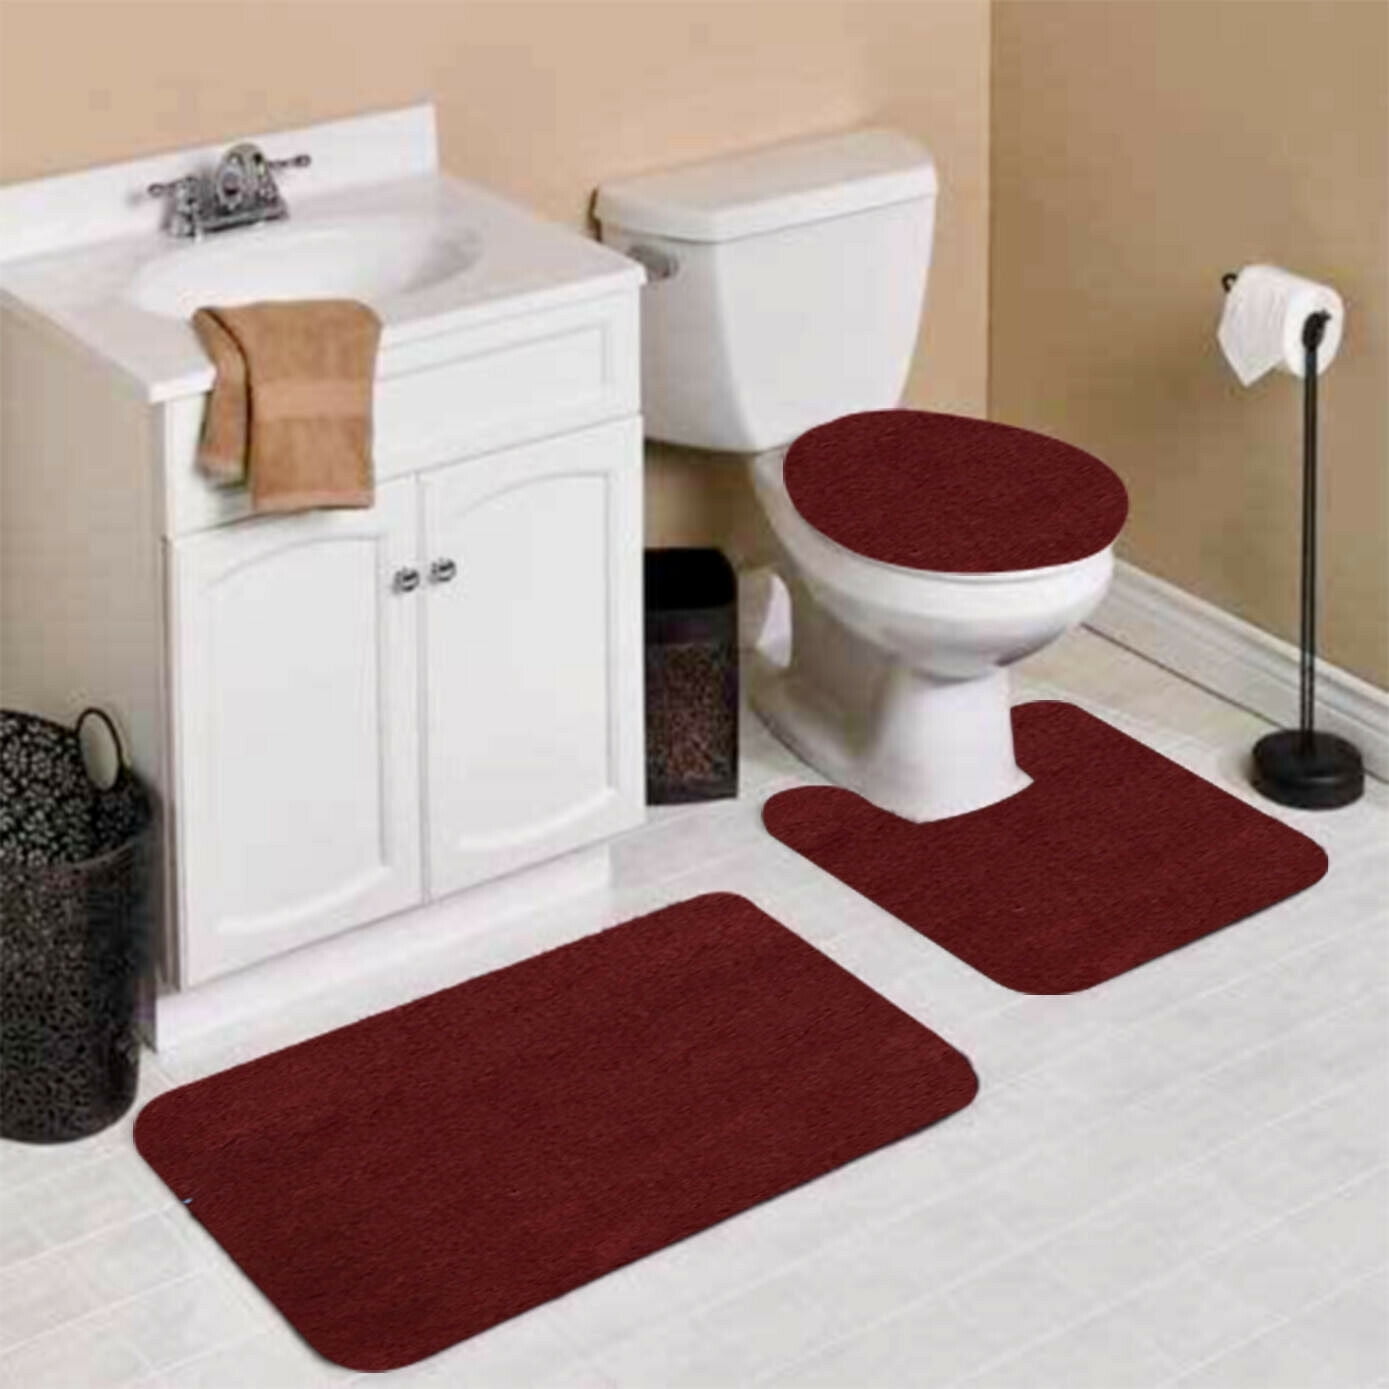 3PCS Simple Toilet Foot Pad Seat Cover Radiator Cap Bathroom Rug Bath Mat Set S 